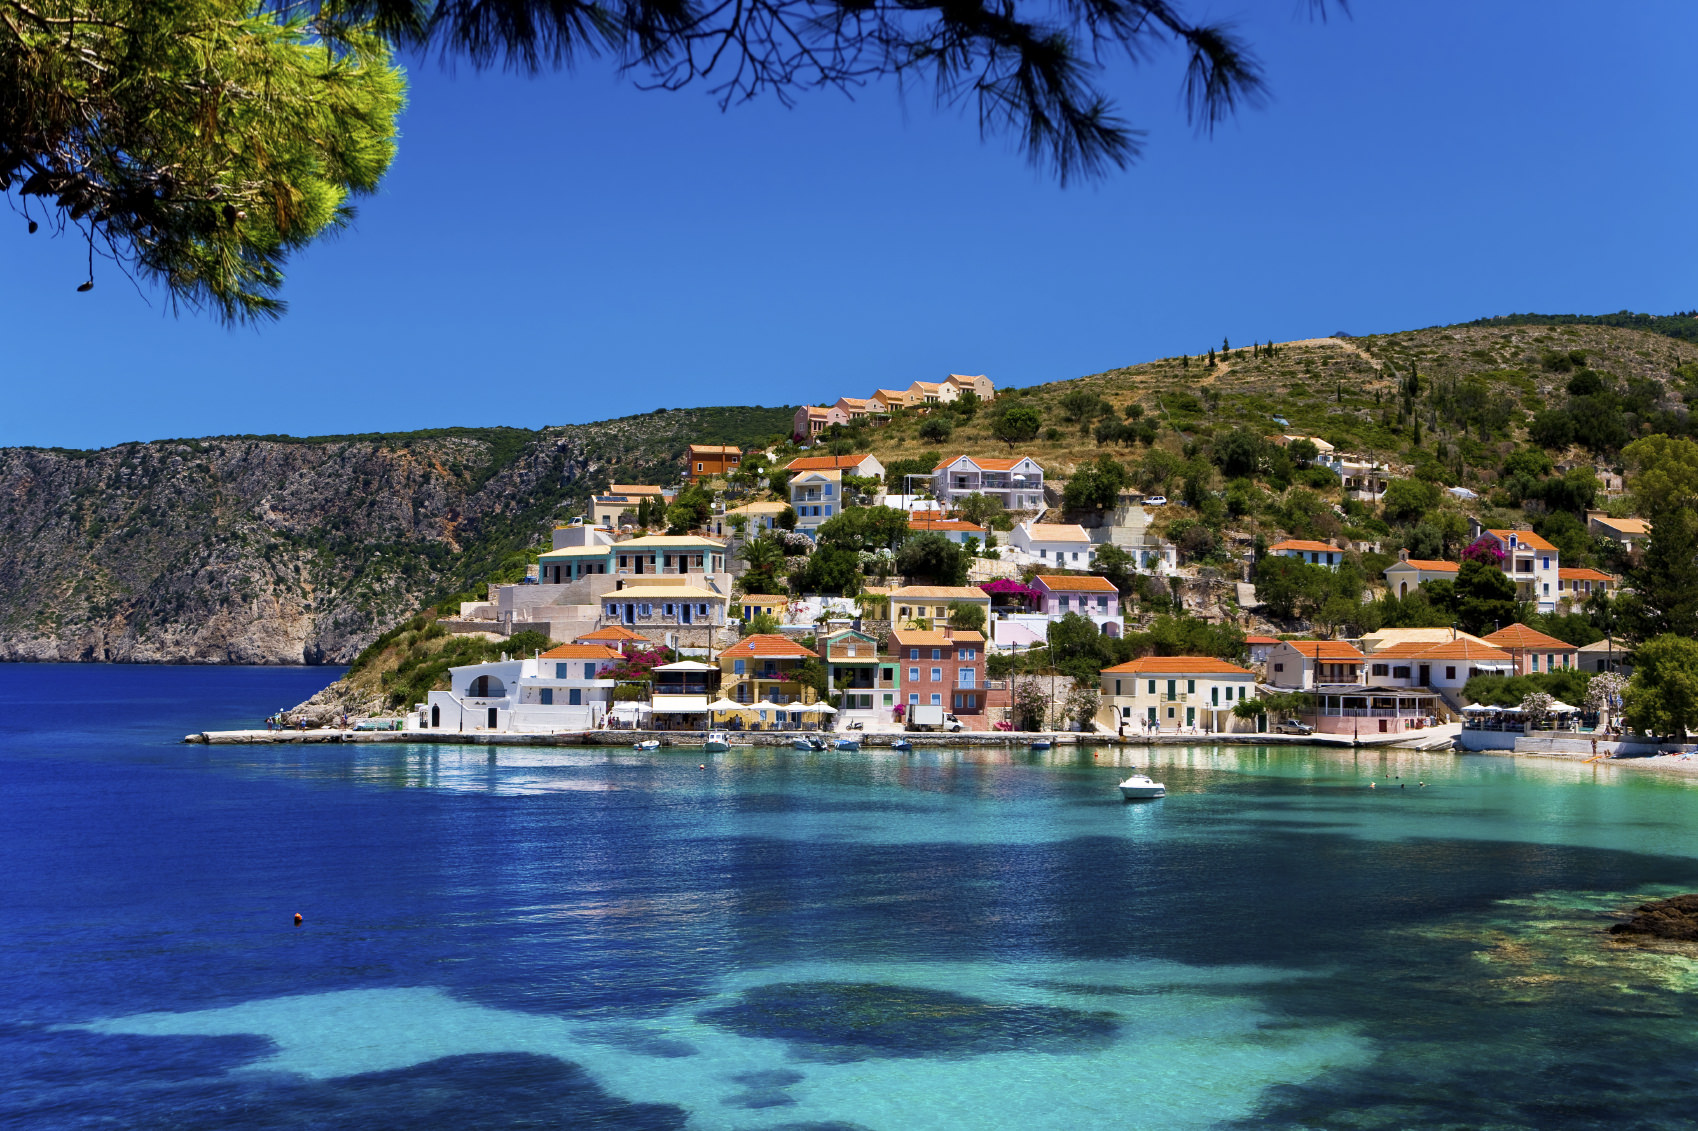 Greece. Ionian Islands - Cephalonia (Kefalonia). Asos (Assos), small rustic village on the west coast of the island